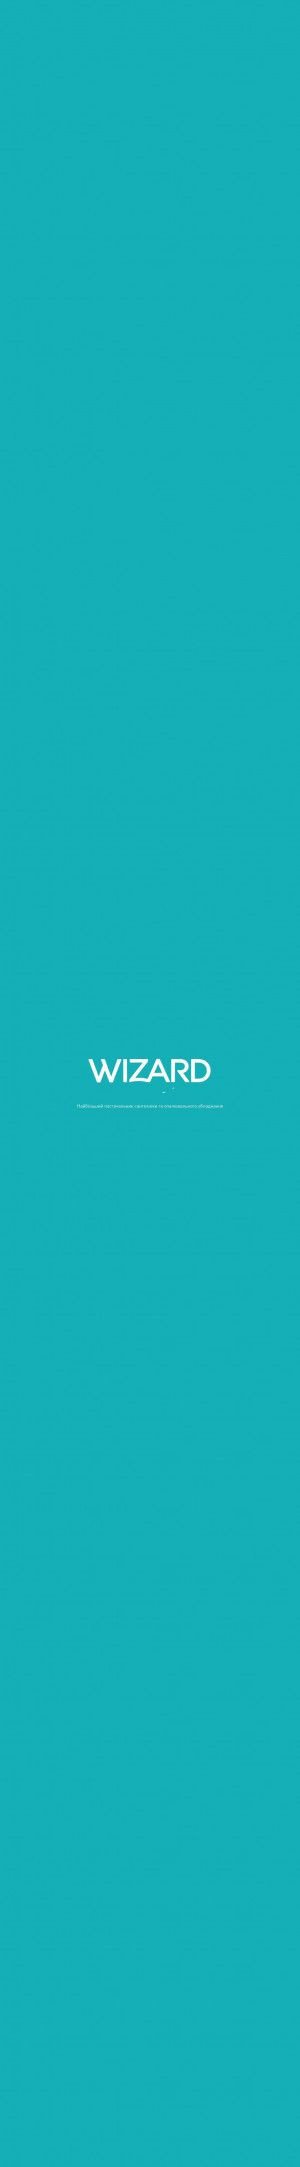 Предпросмотр для www.wizard.ua — Wizard